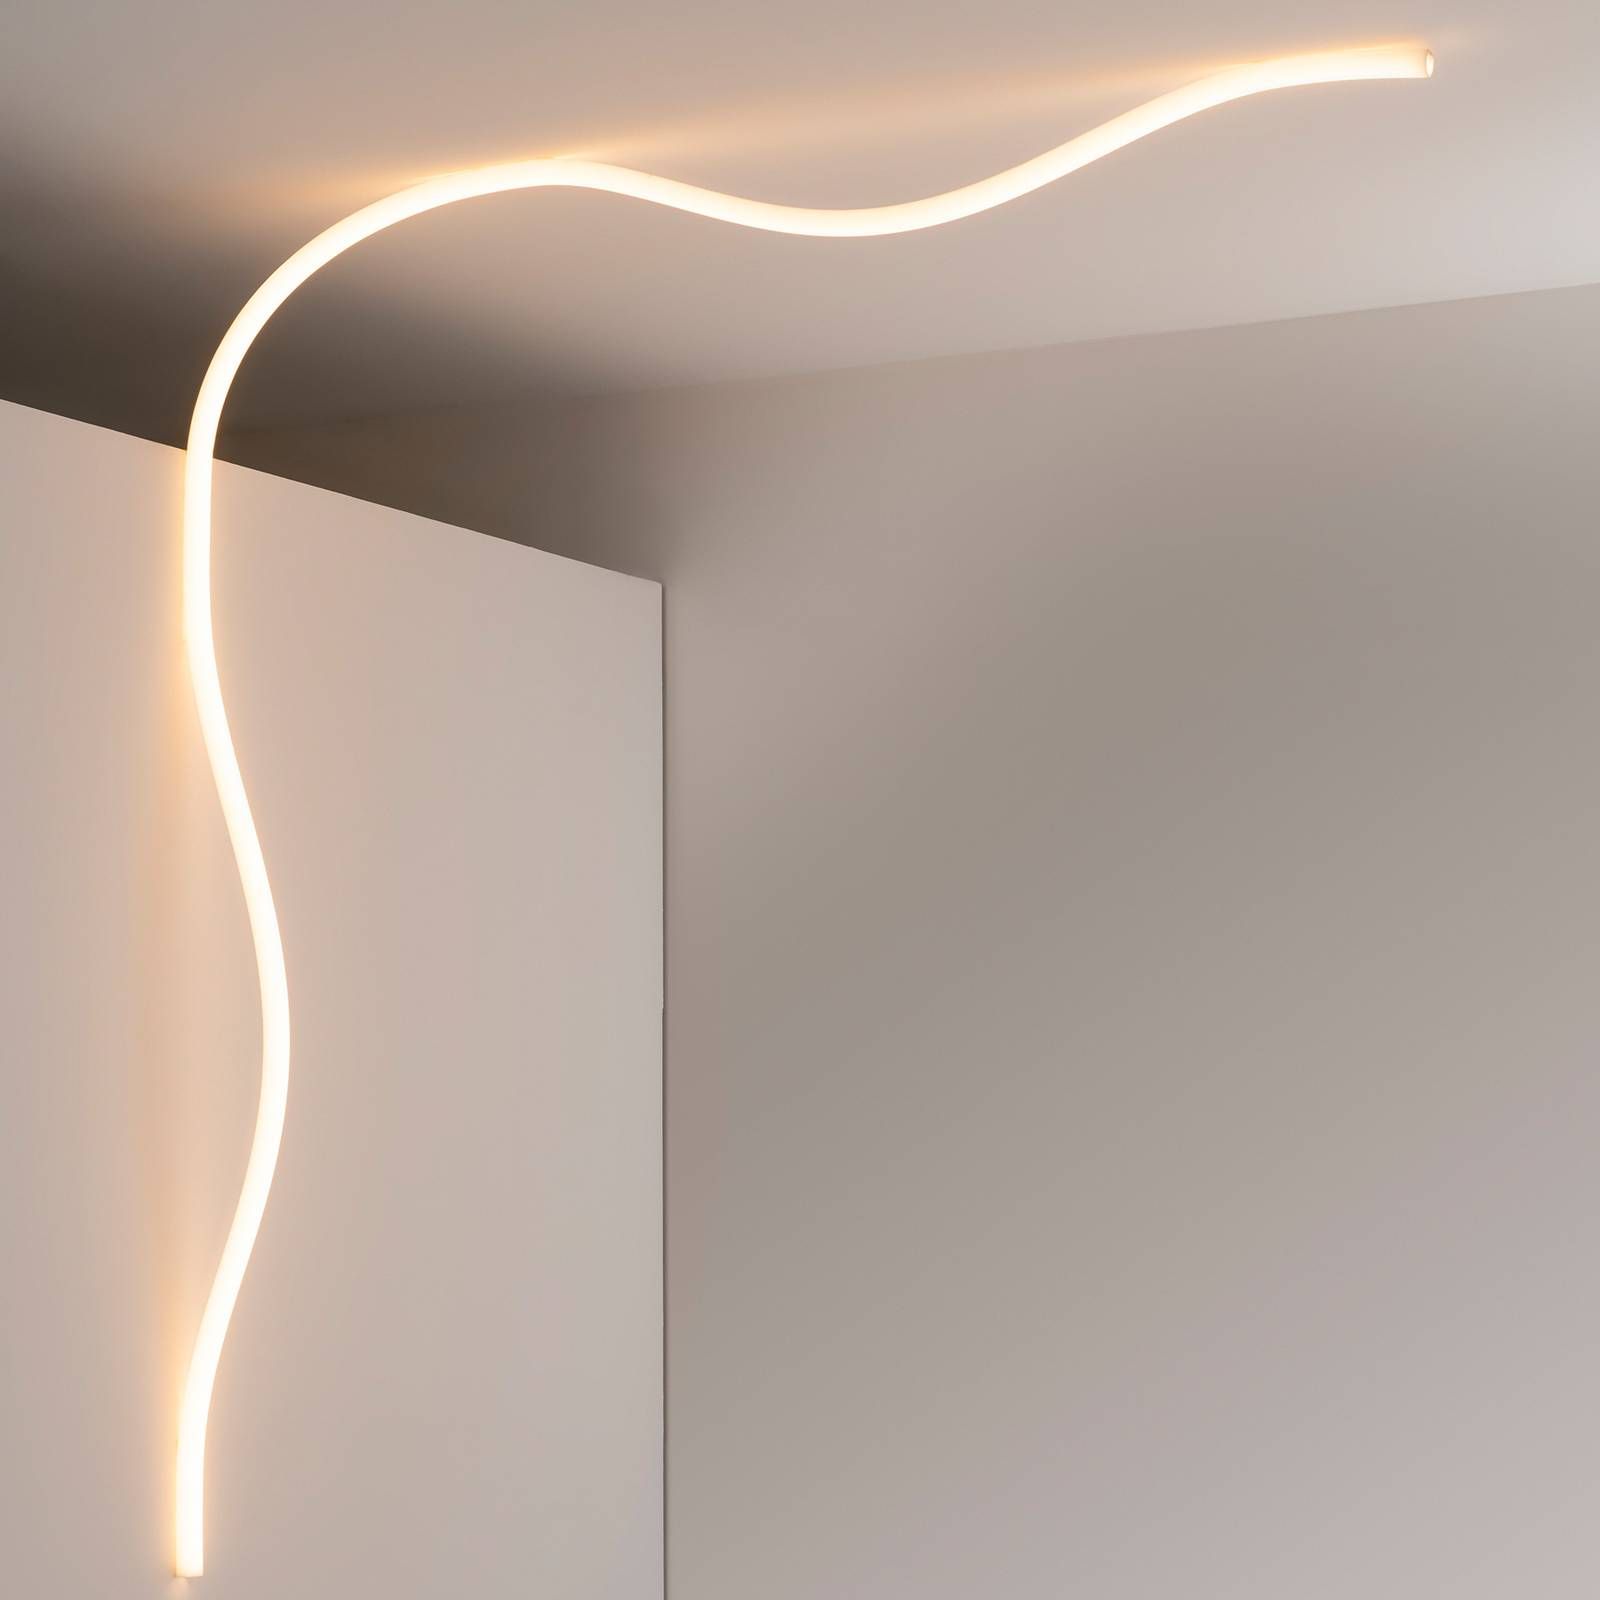 Artemide La linea svetelný LED had, 5 metrov, Obývacia izba / jedáleň, silikón, 75W, P: 500 cm